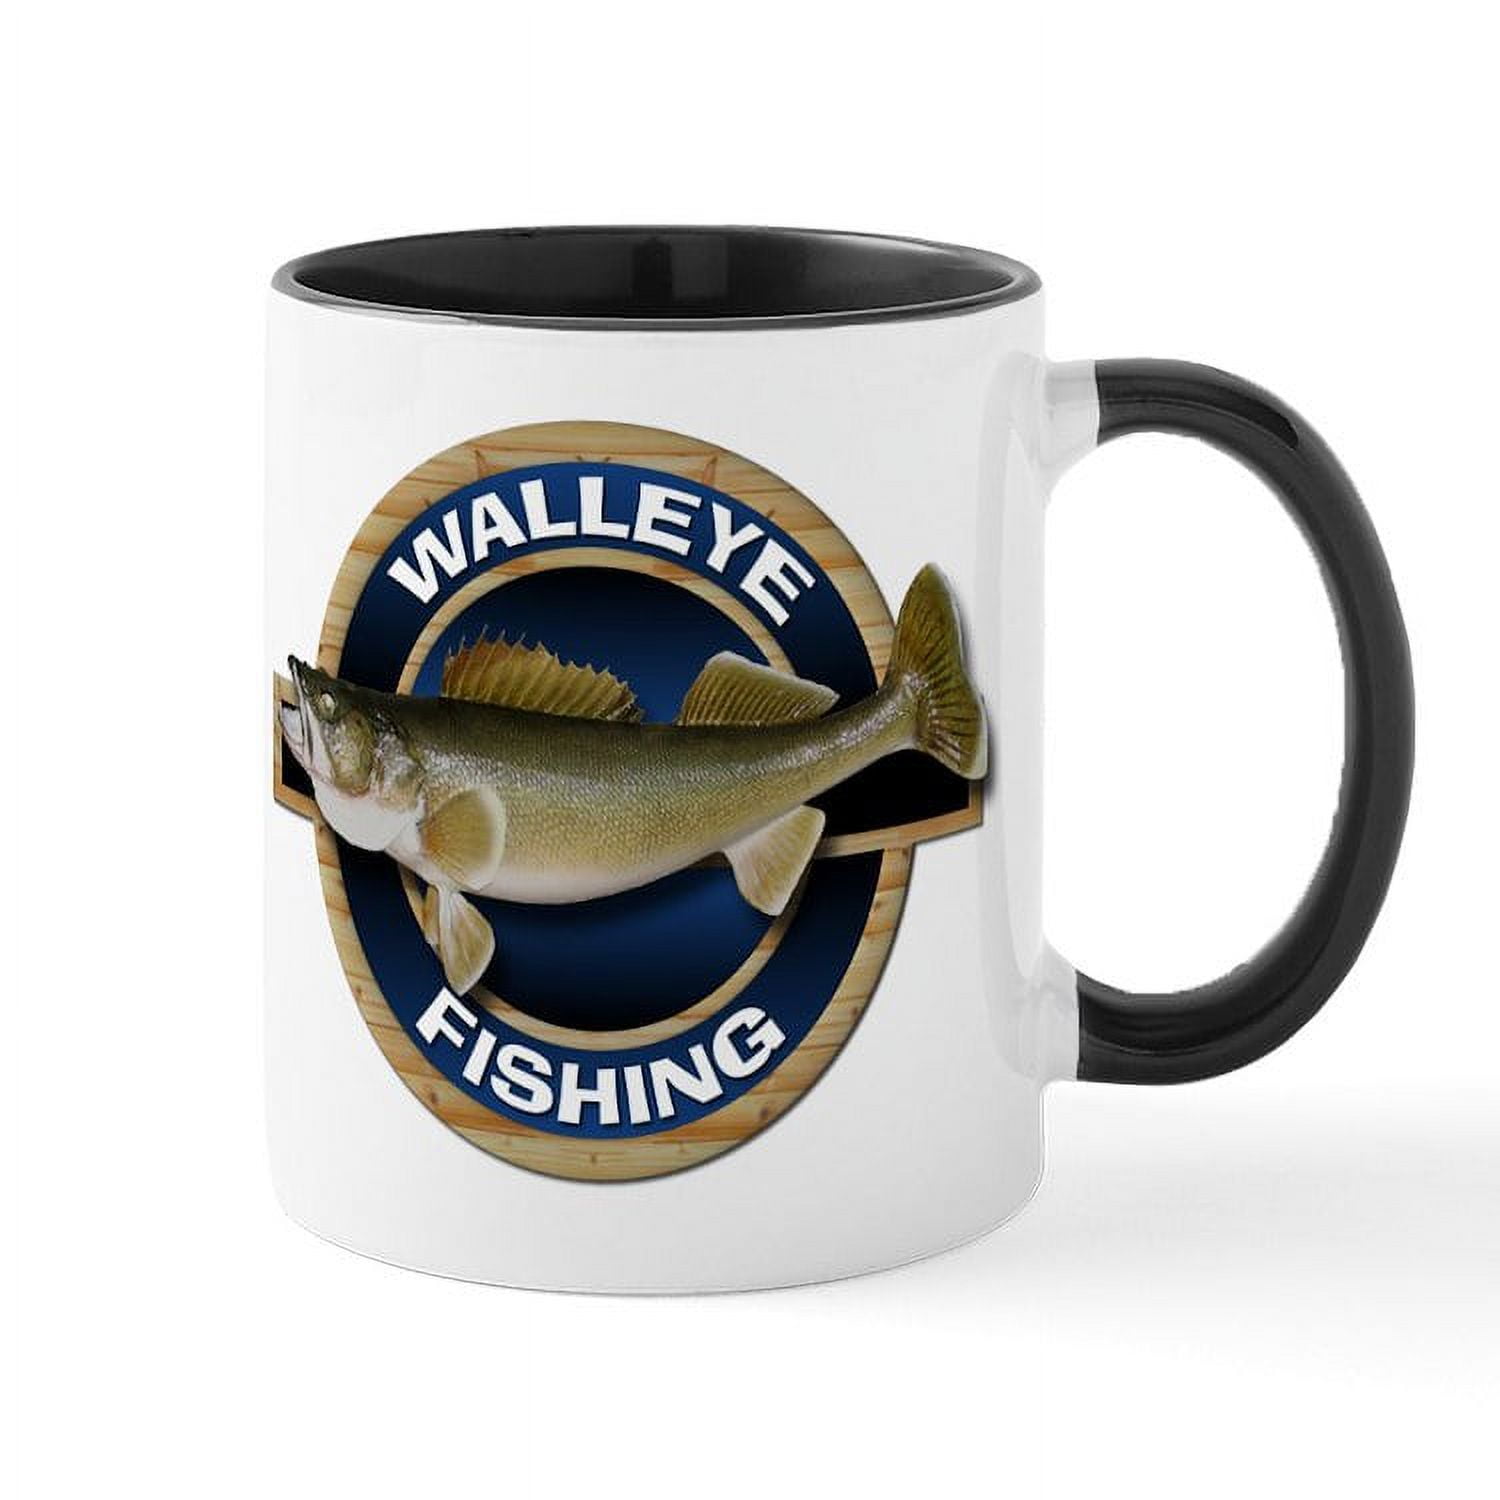 CafePress - Walleye Fishing Mug - 11 oz Ceramic Mug - Novelty Coffee Tea  Cup 